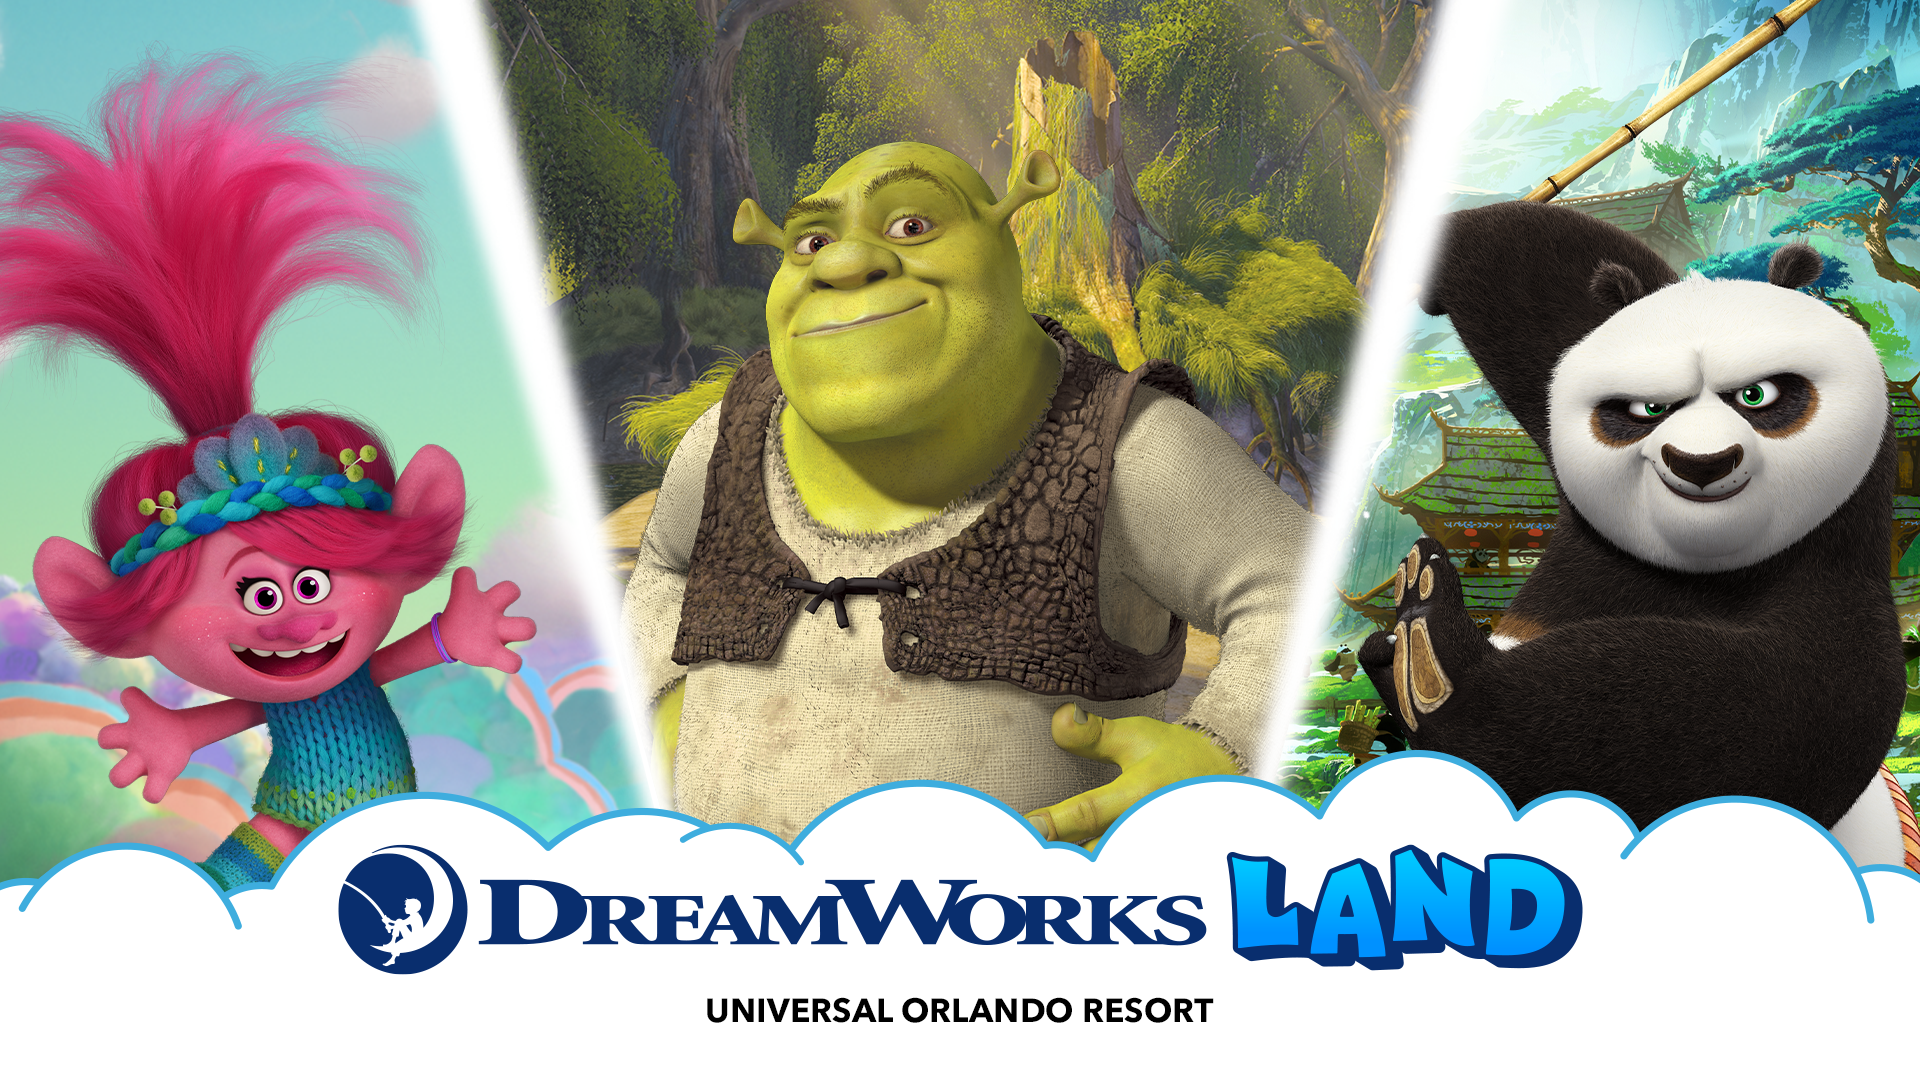 dreamworks-land-at-universal-orlando-resort-character-artwork